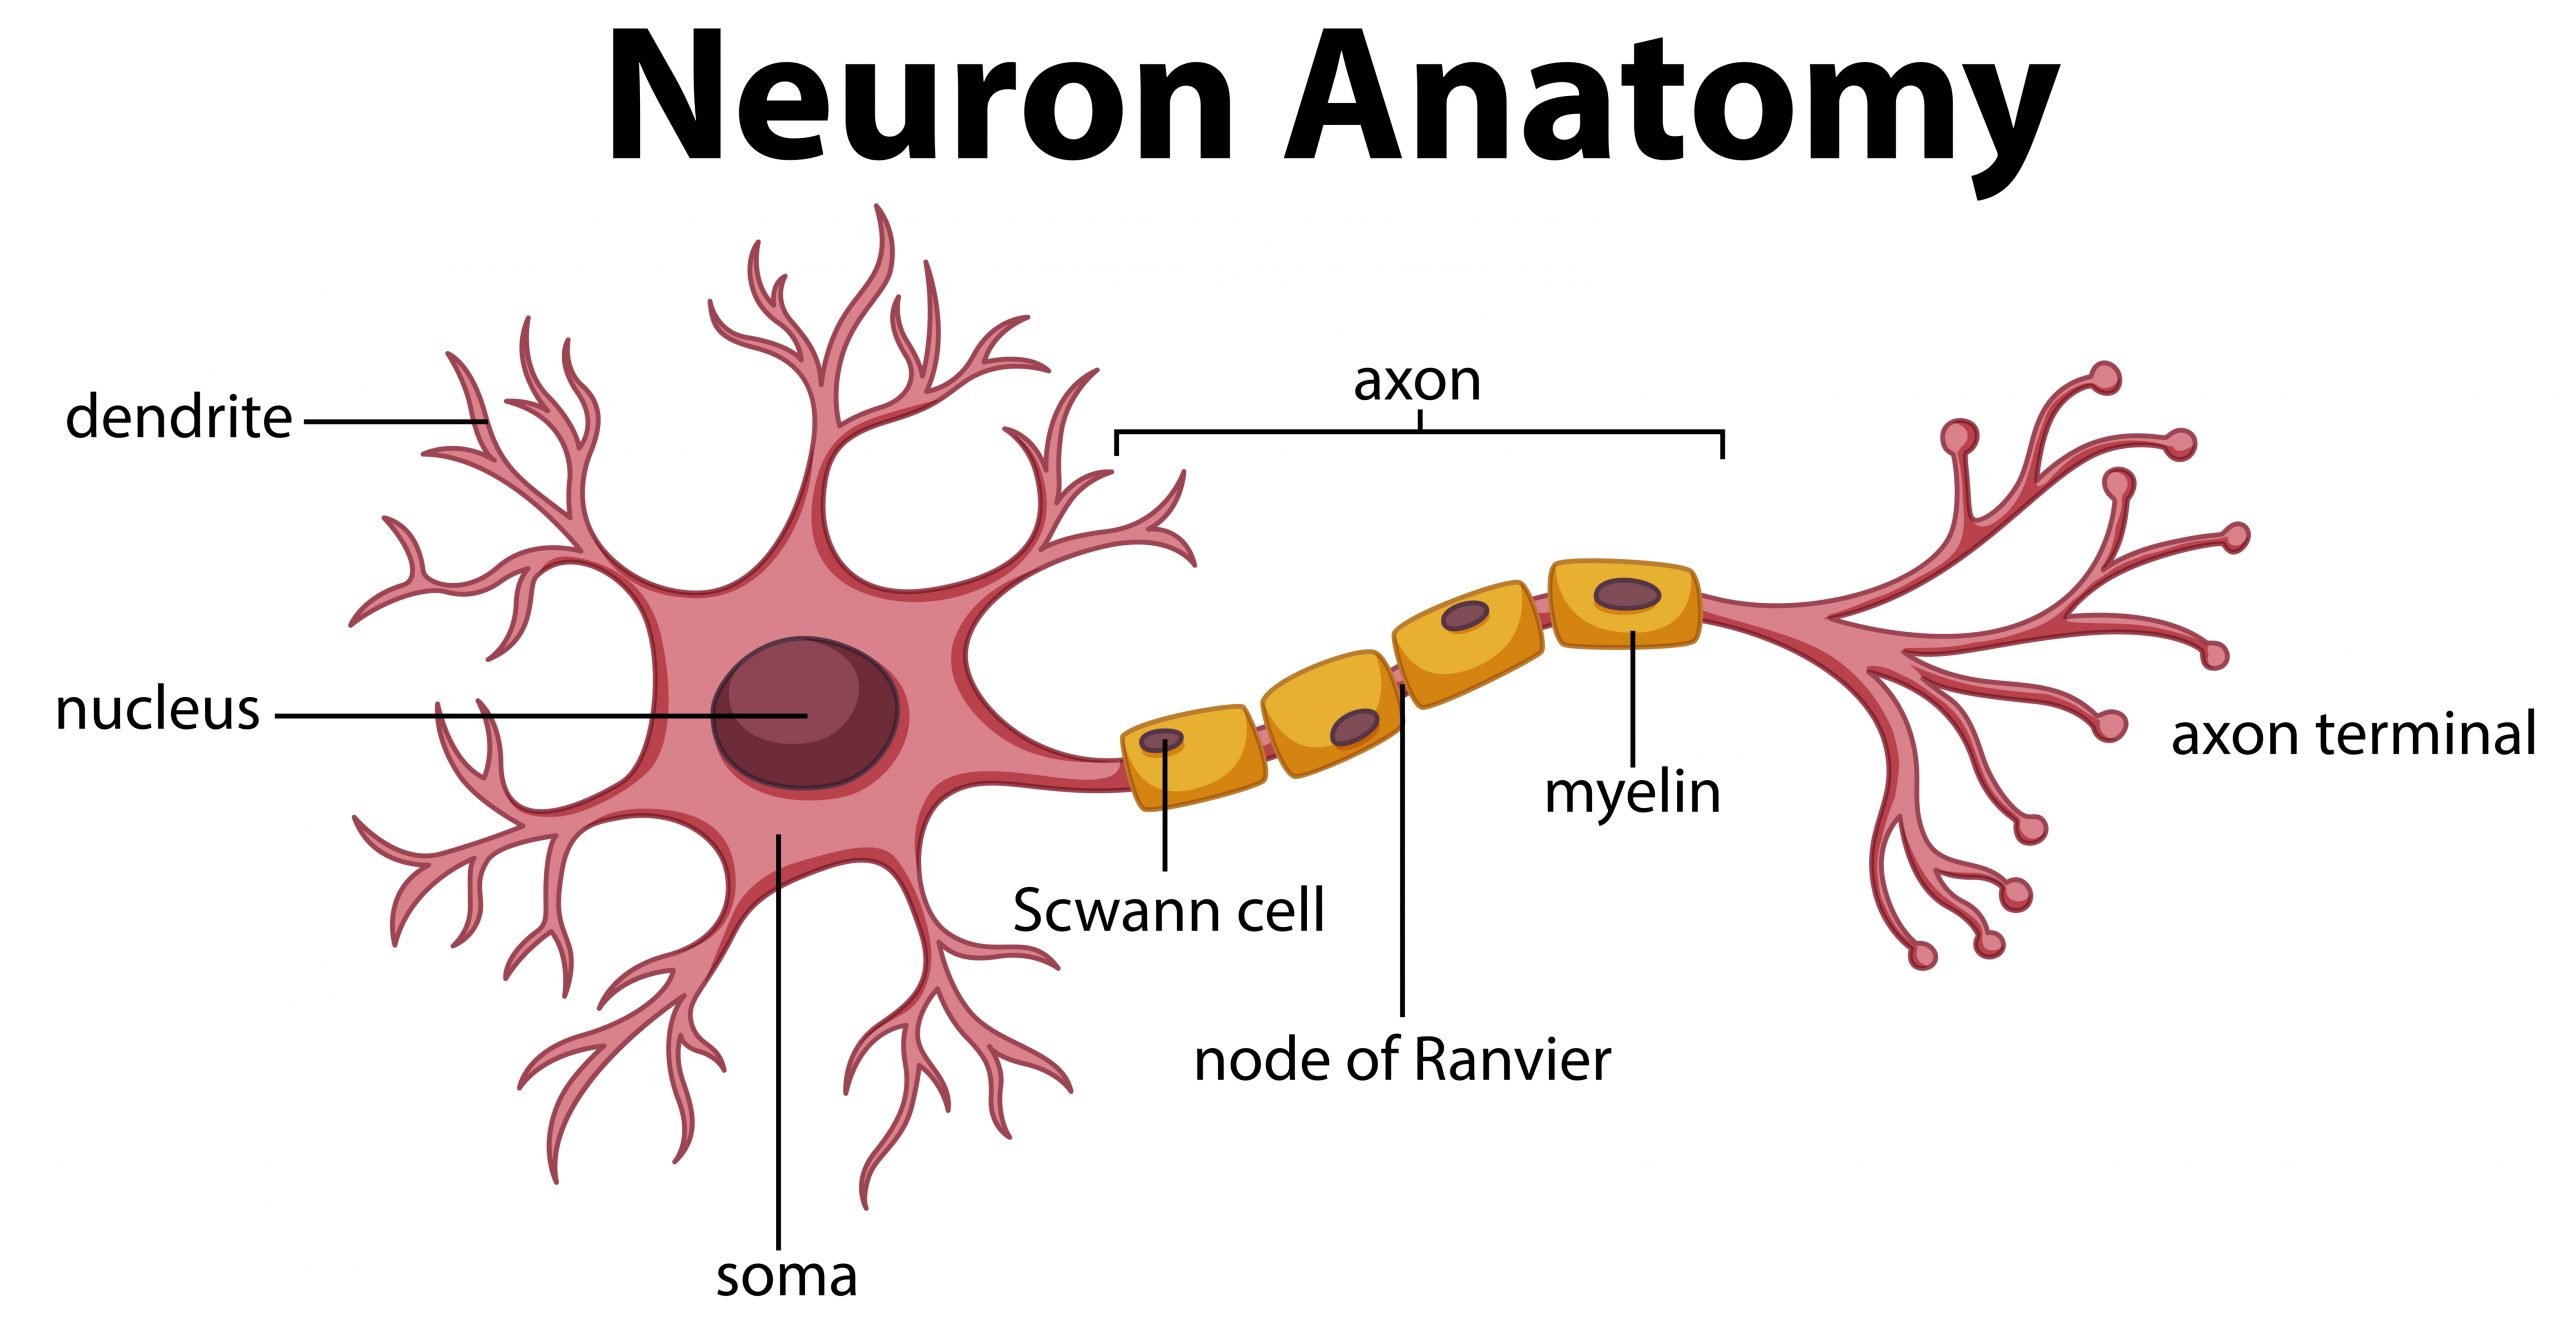 Neuron anatomy